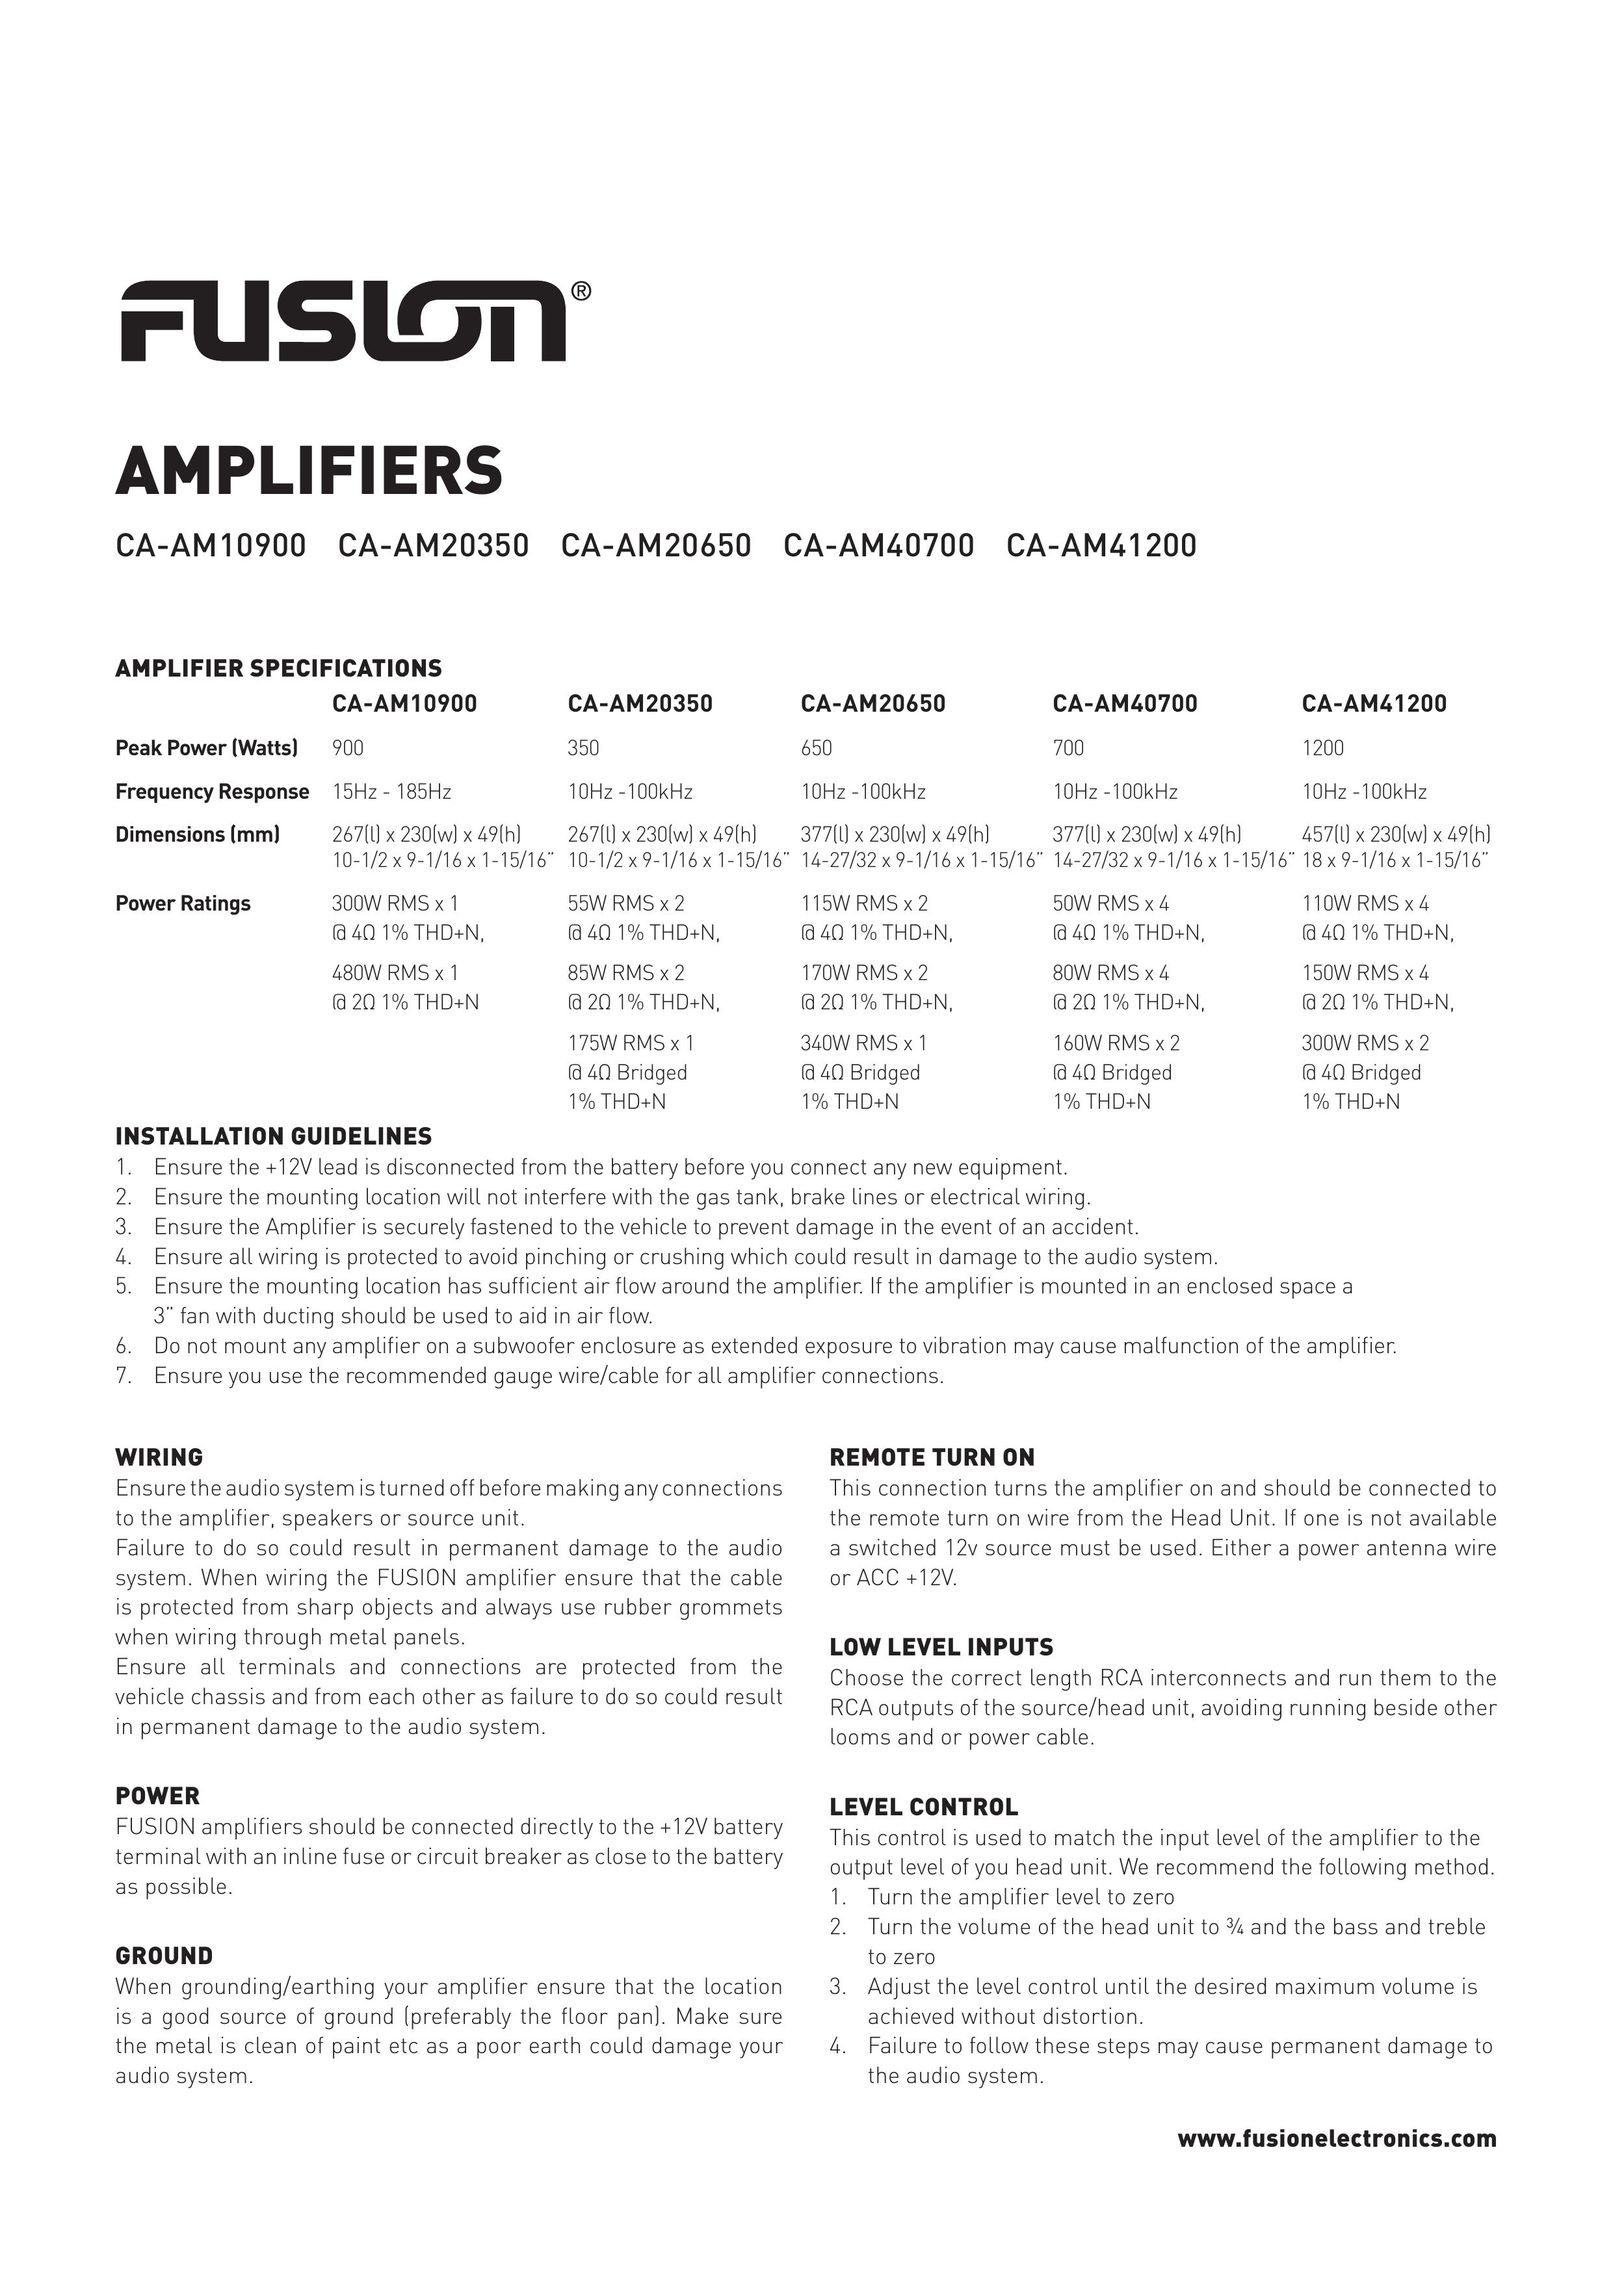 Fusion CA-AM10900 Car Amplifier User Manual